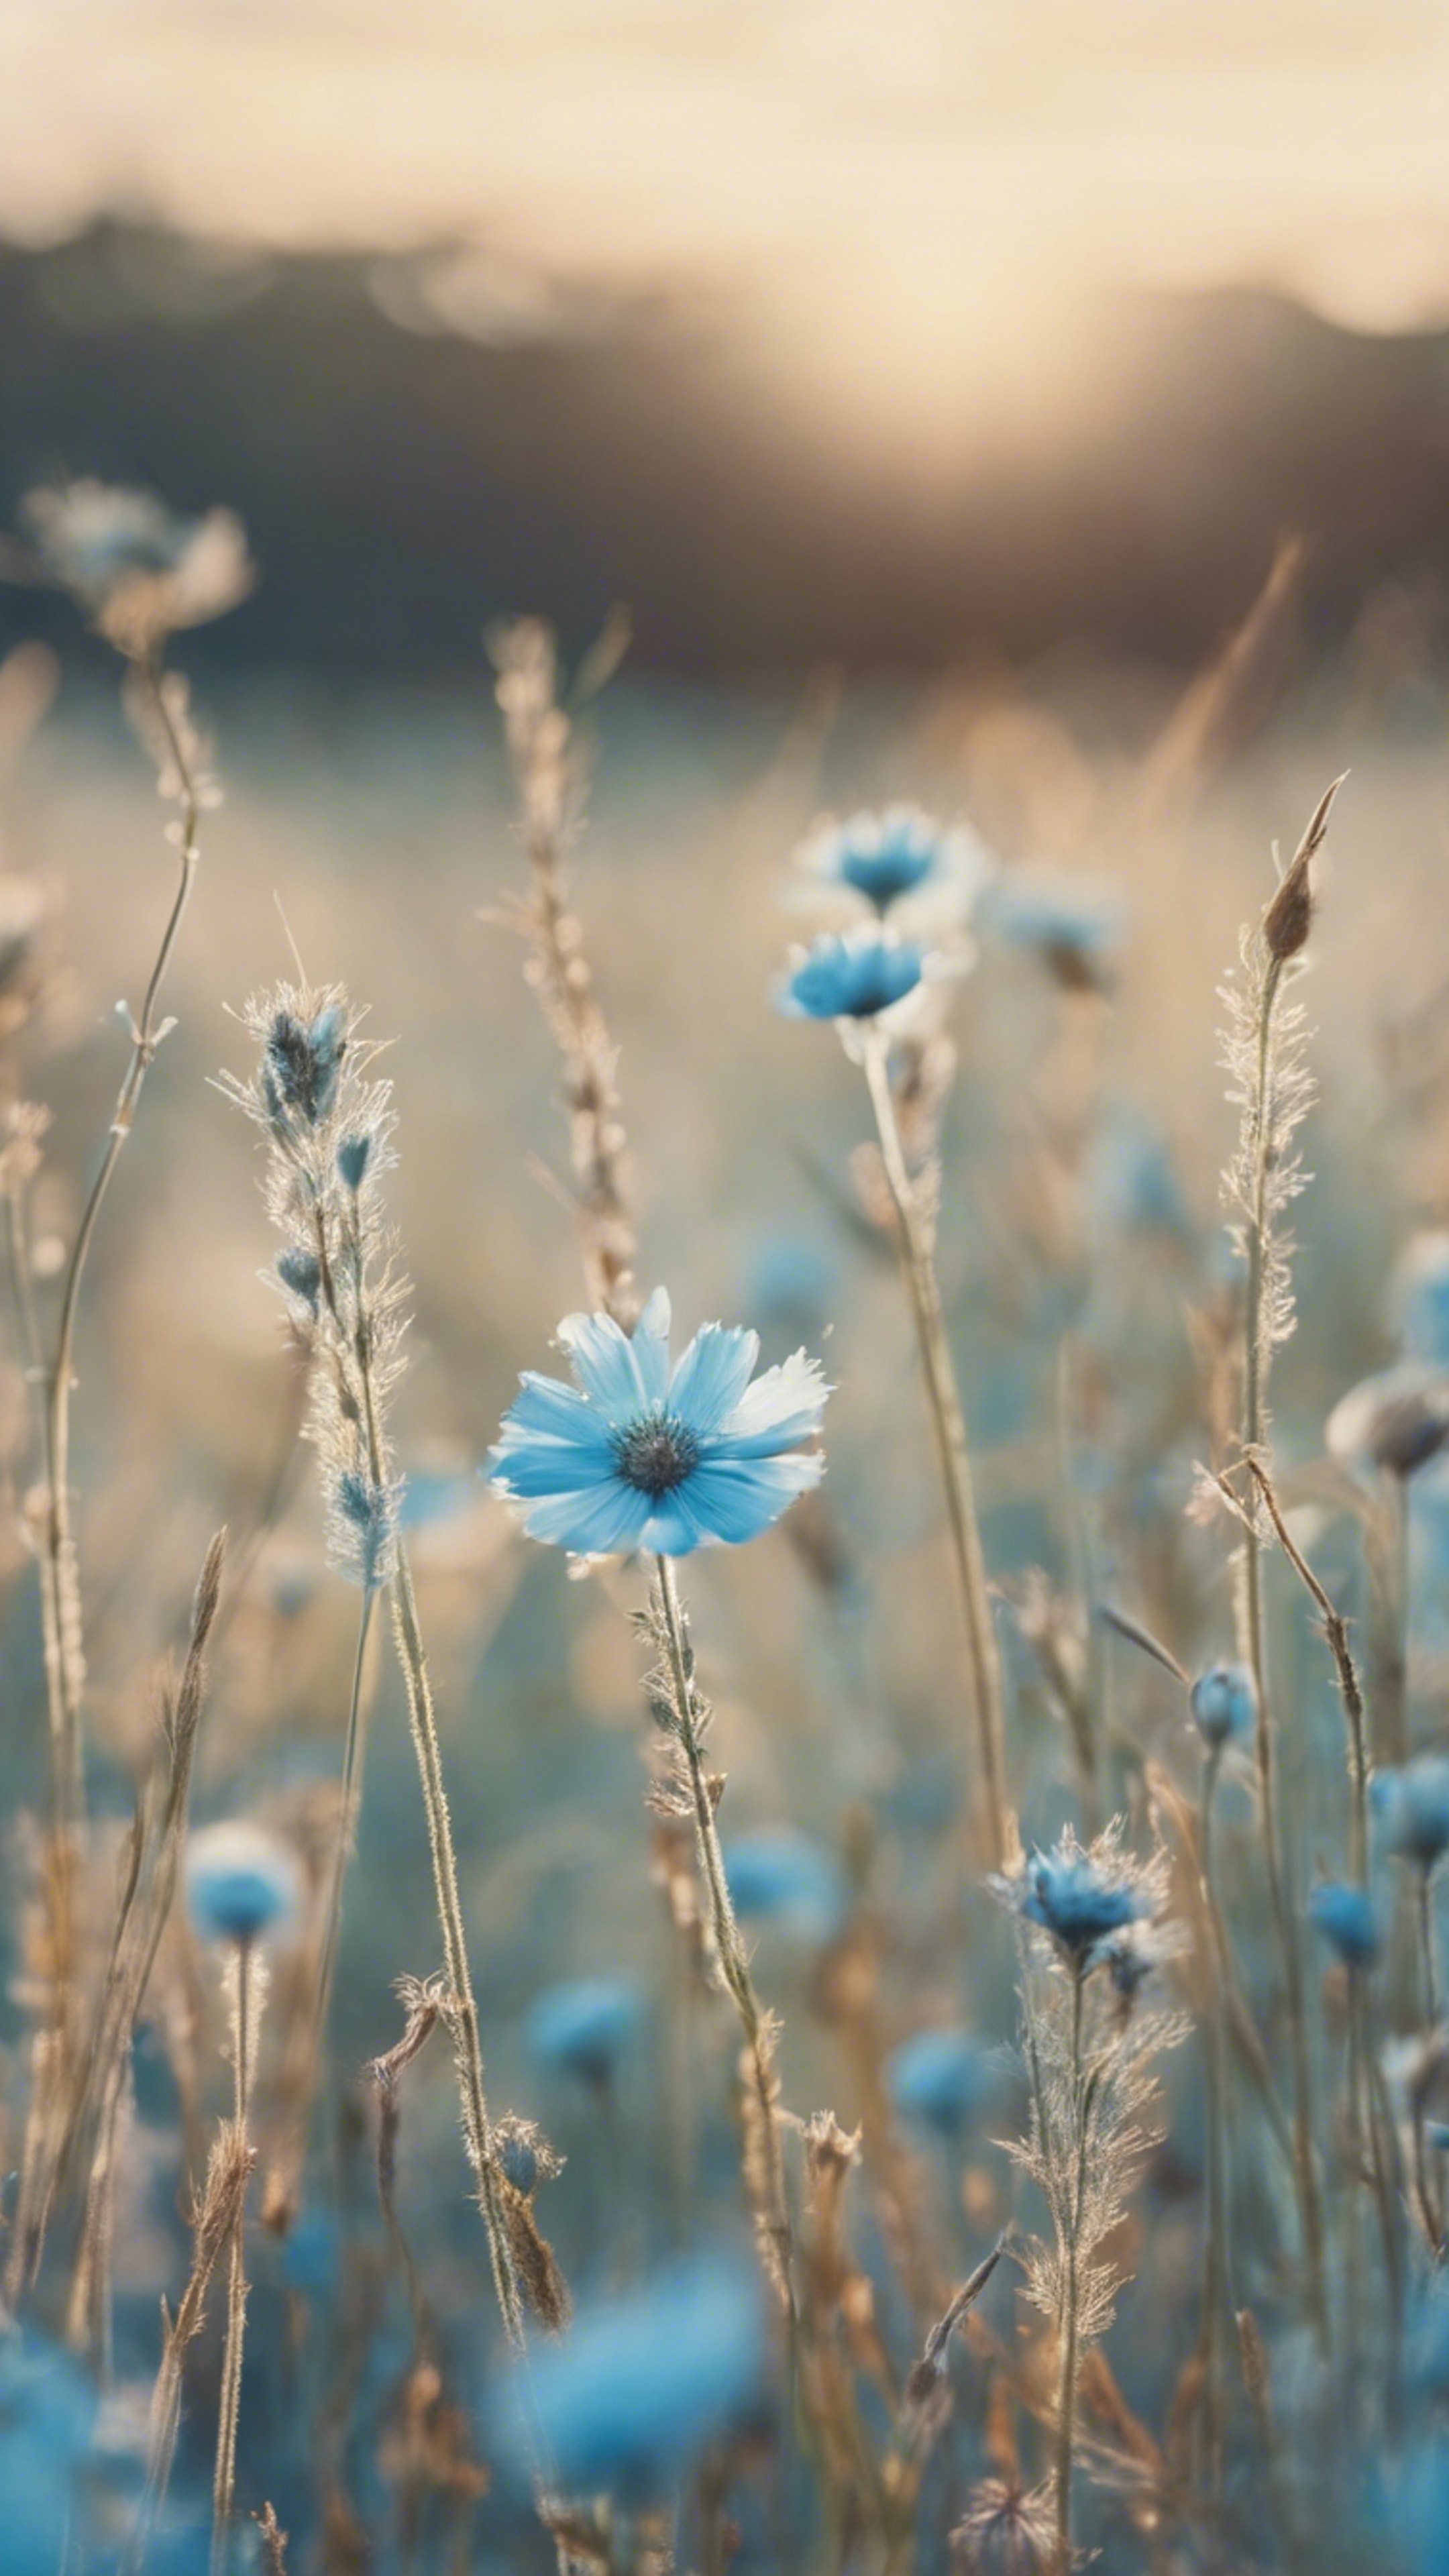 A peaceful pastel blue meadow under a clear sky. ورق الجدران[237c4d0b569745d38be8]